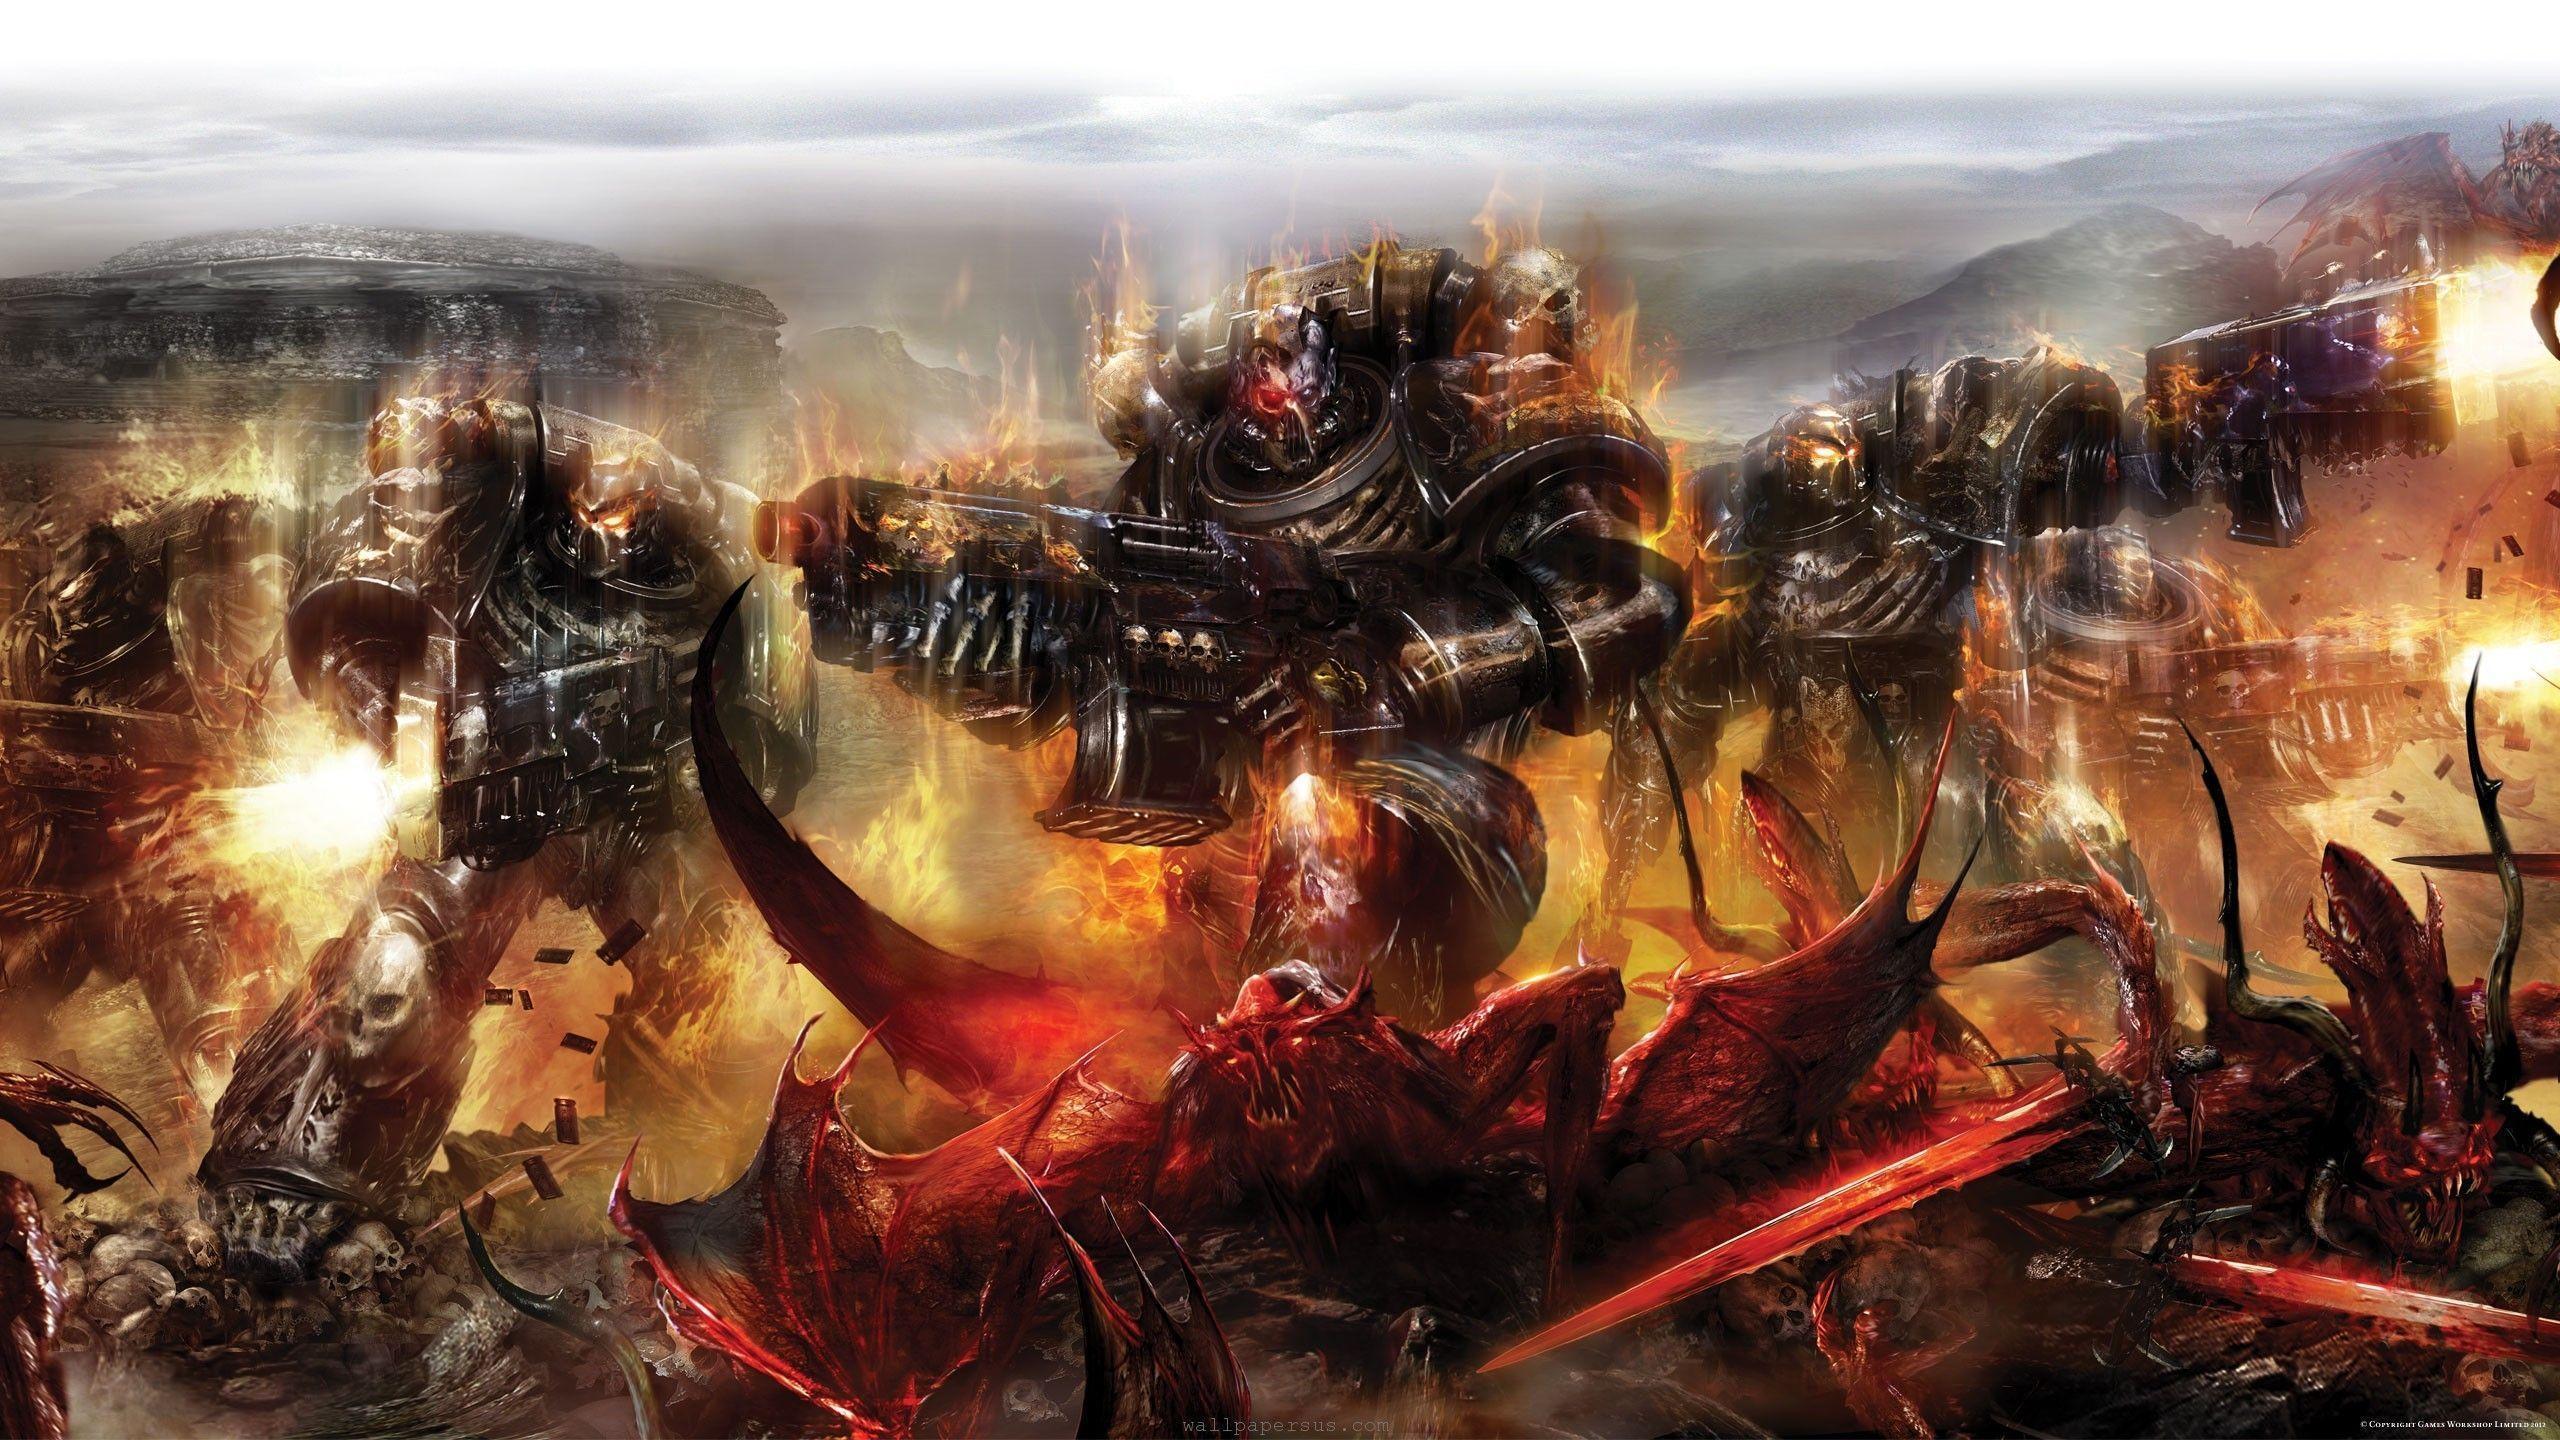 Video Game Warhammer 40k Wallpaper 2560x1440 px Free Download